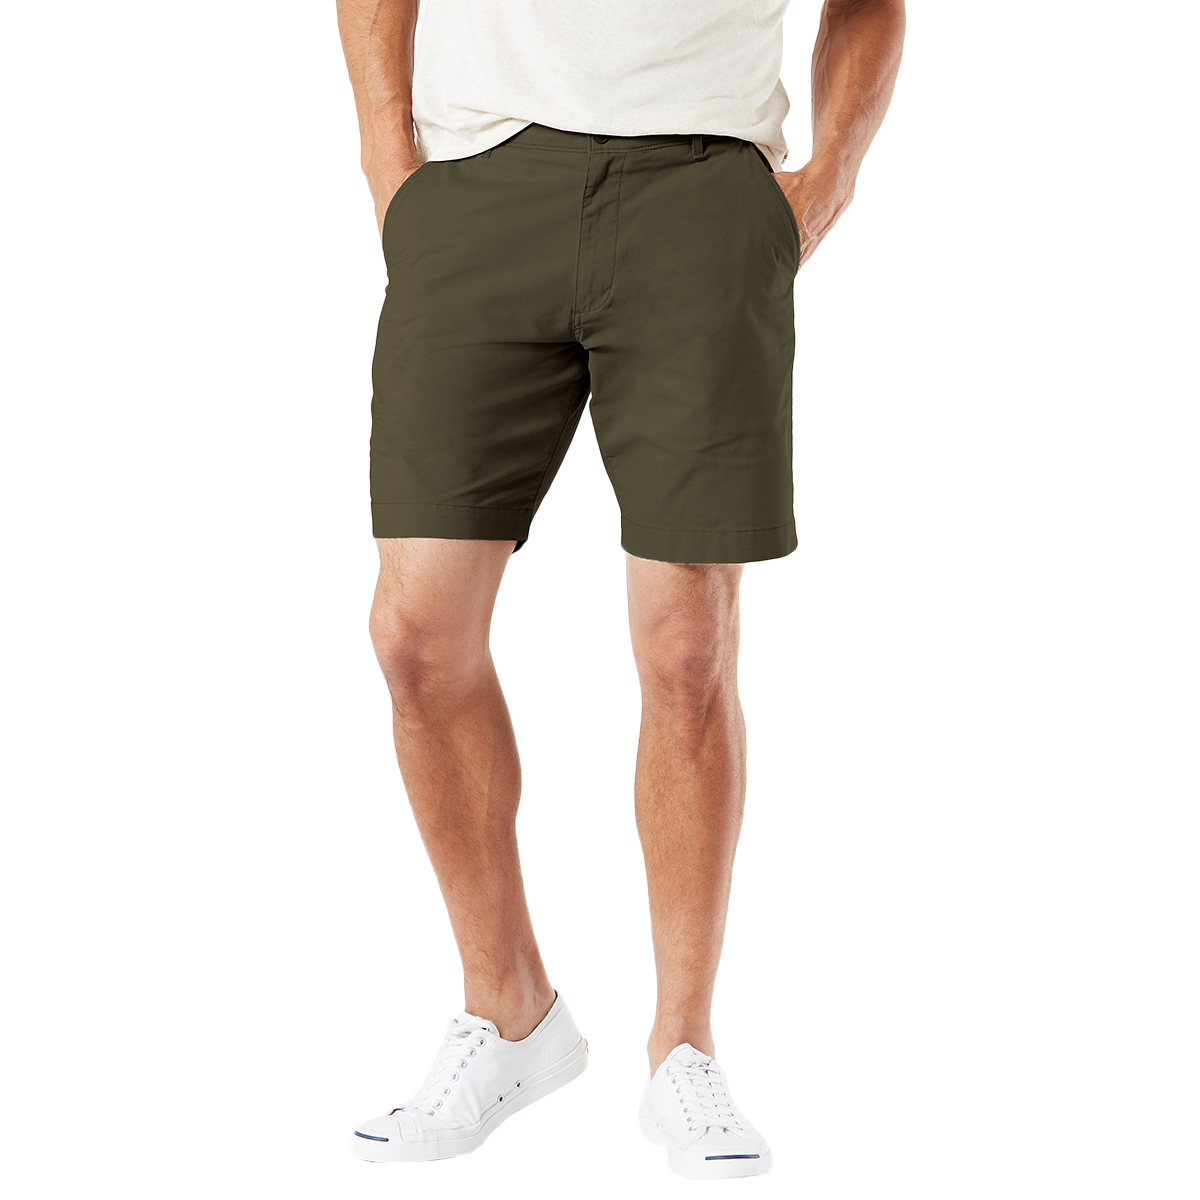 Dockers Men's Duraflex Lite Straight-Fit Shorts - Green, 33